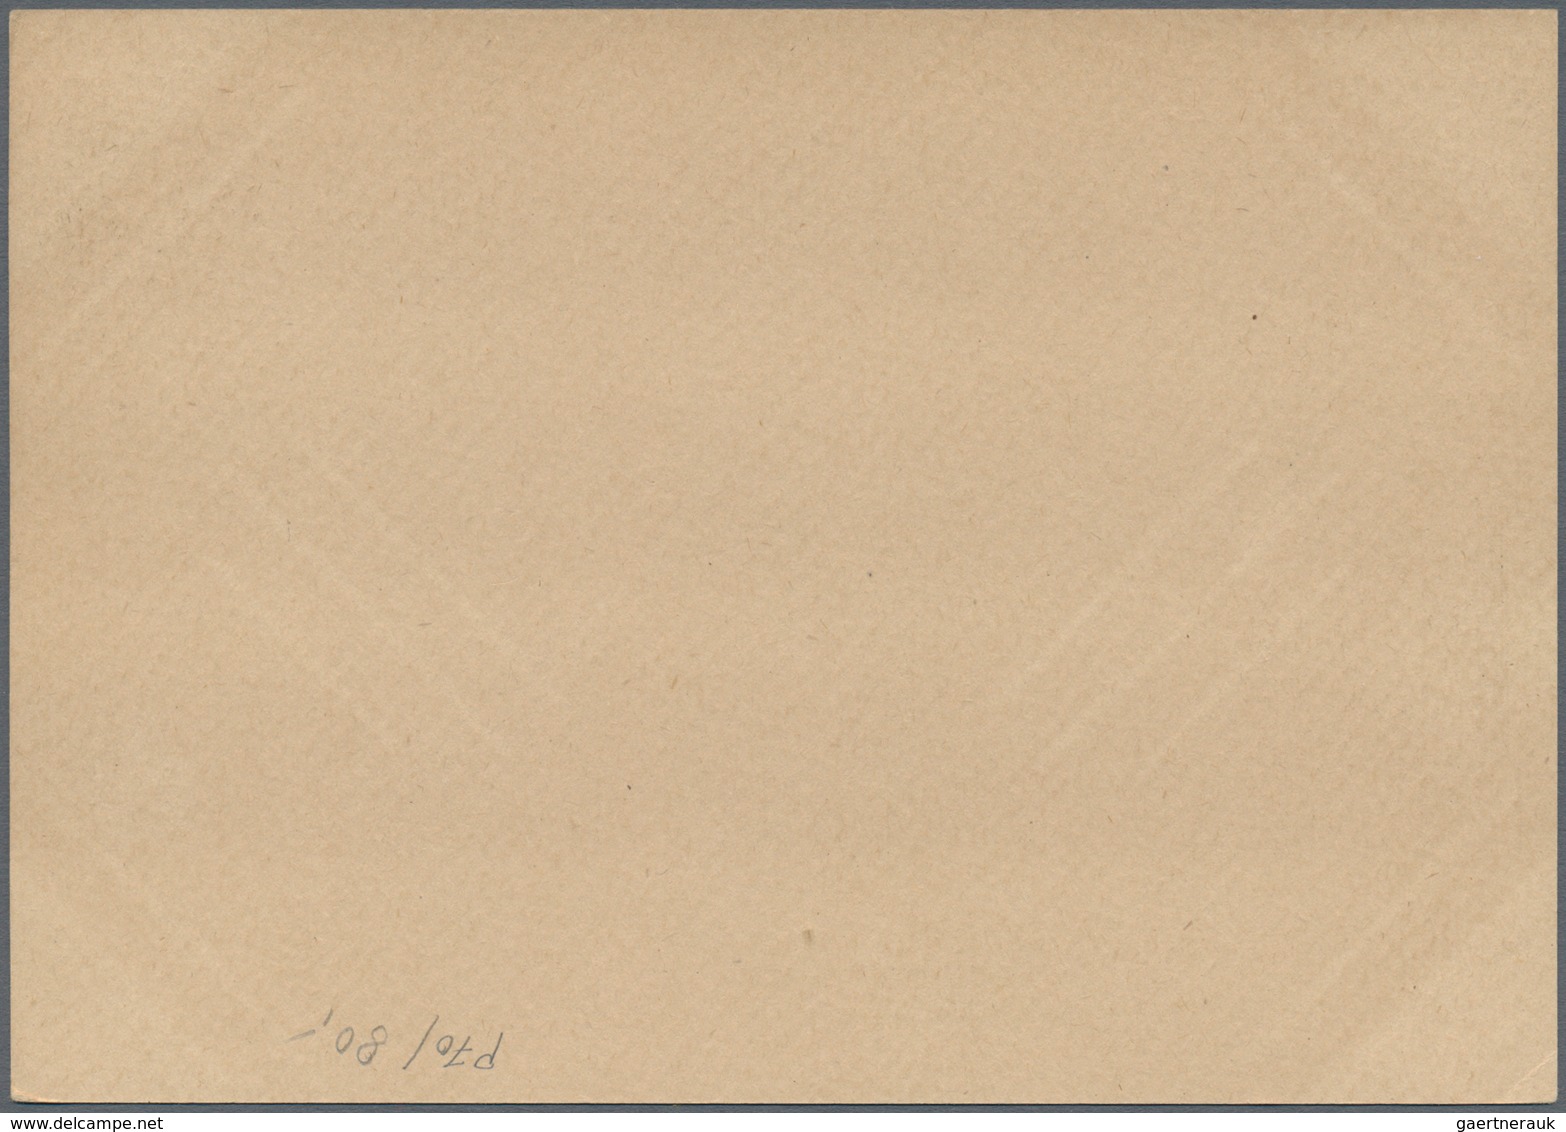 Sowjetunion - Ganzsachen: 1929, Picture Postcard With Recommandation Jor A Medicin Cabinet. - Unclassified